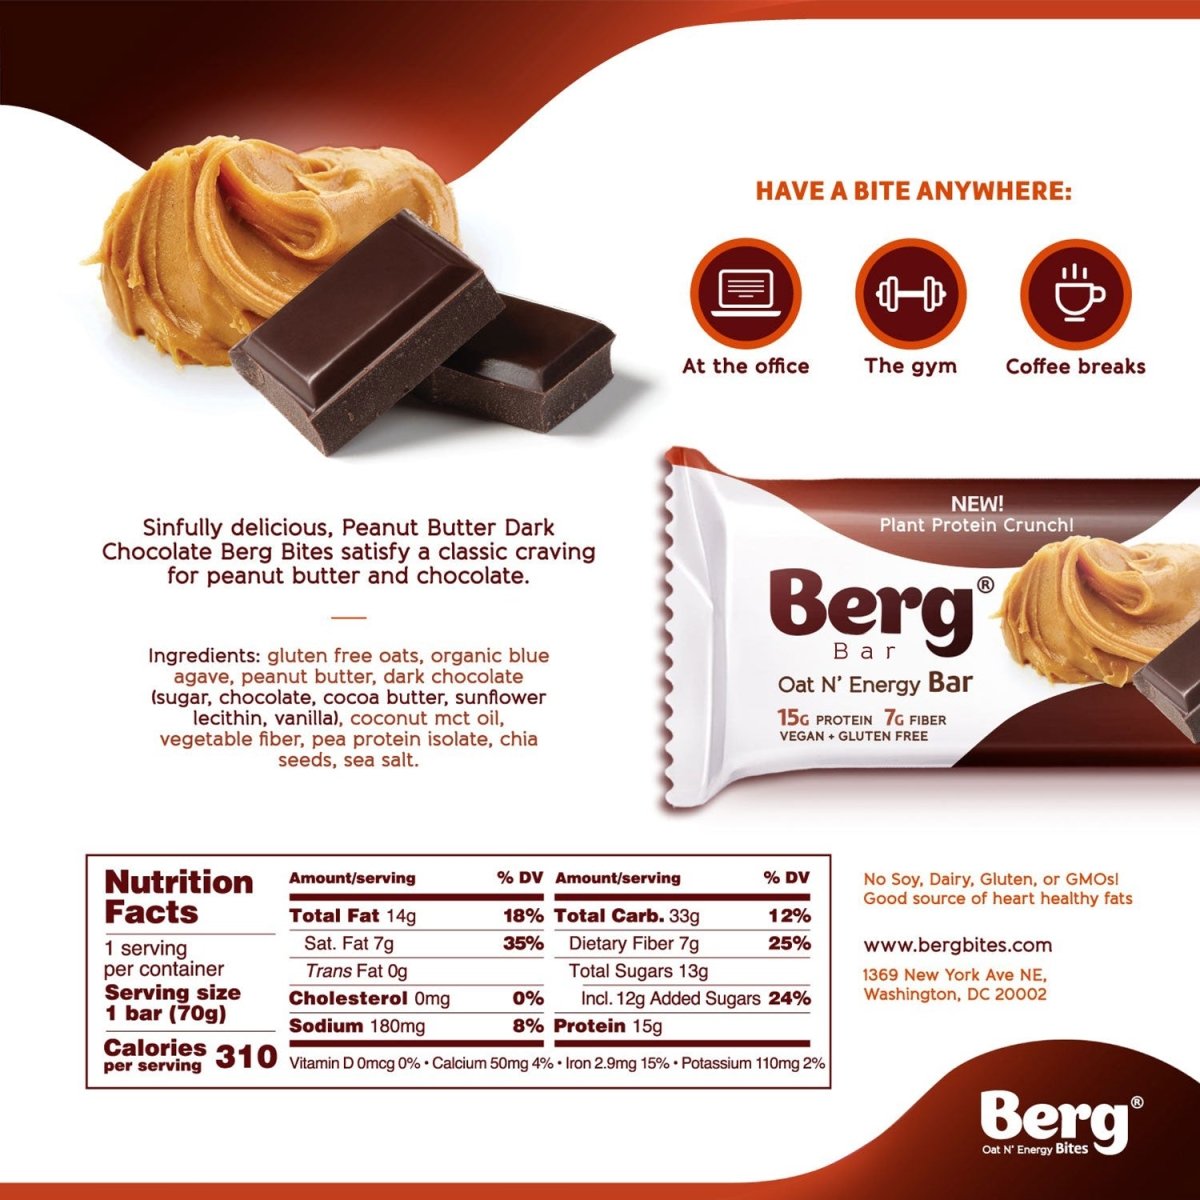 Berg Bar Peanut Butter Dark Chocolate - Plant Protein Crunch - Box of 8 - Berg Bites - Clean Energy